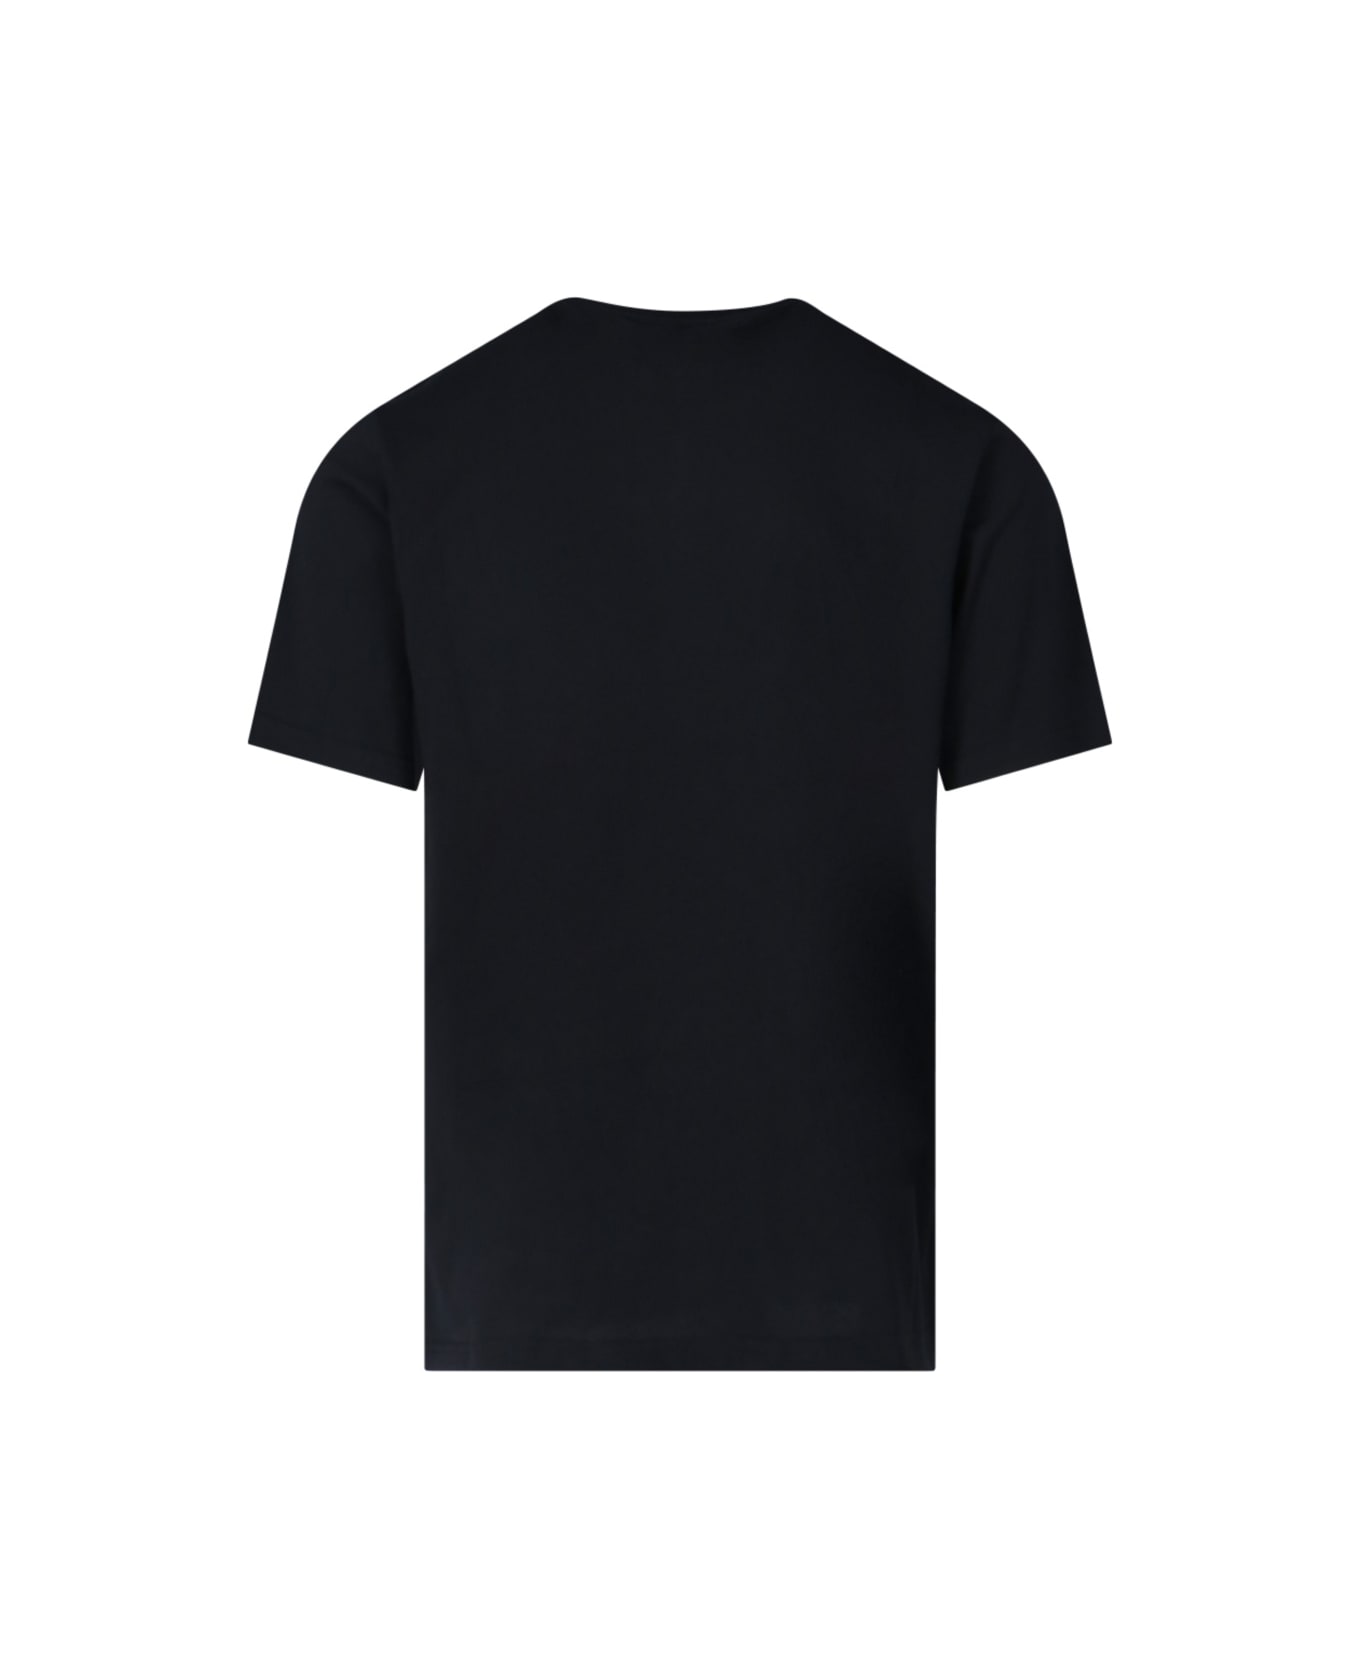 Craig Green T-Shirt - Black